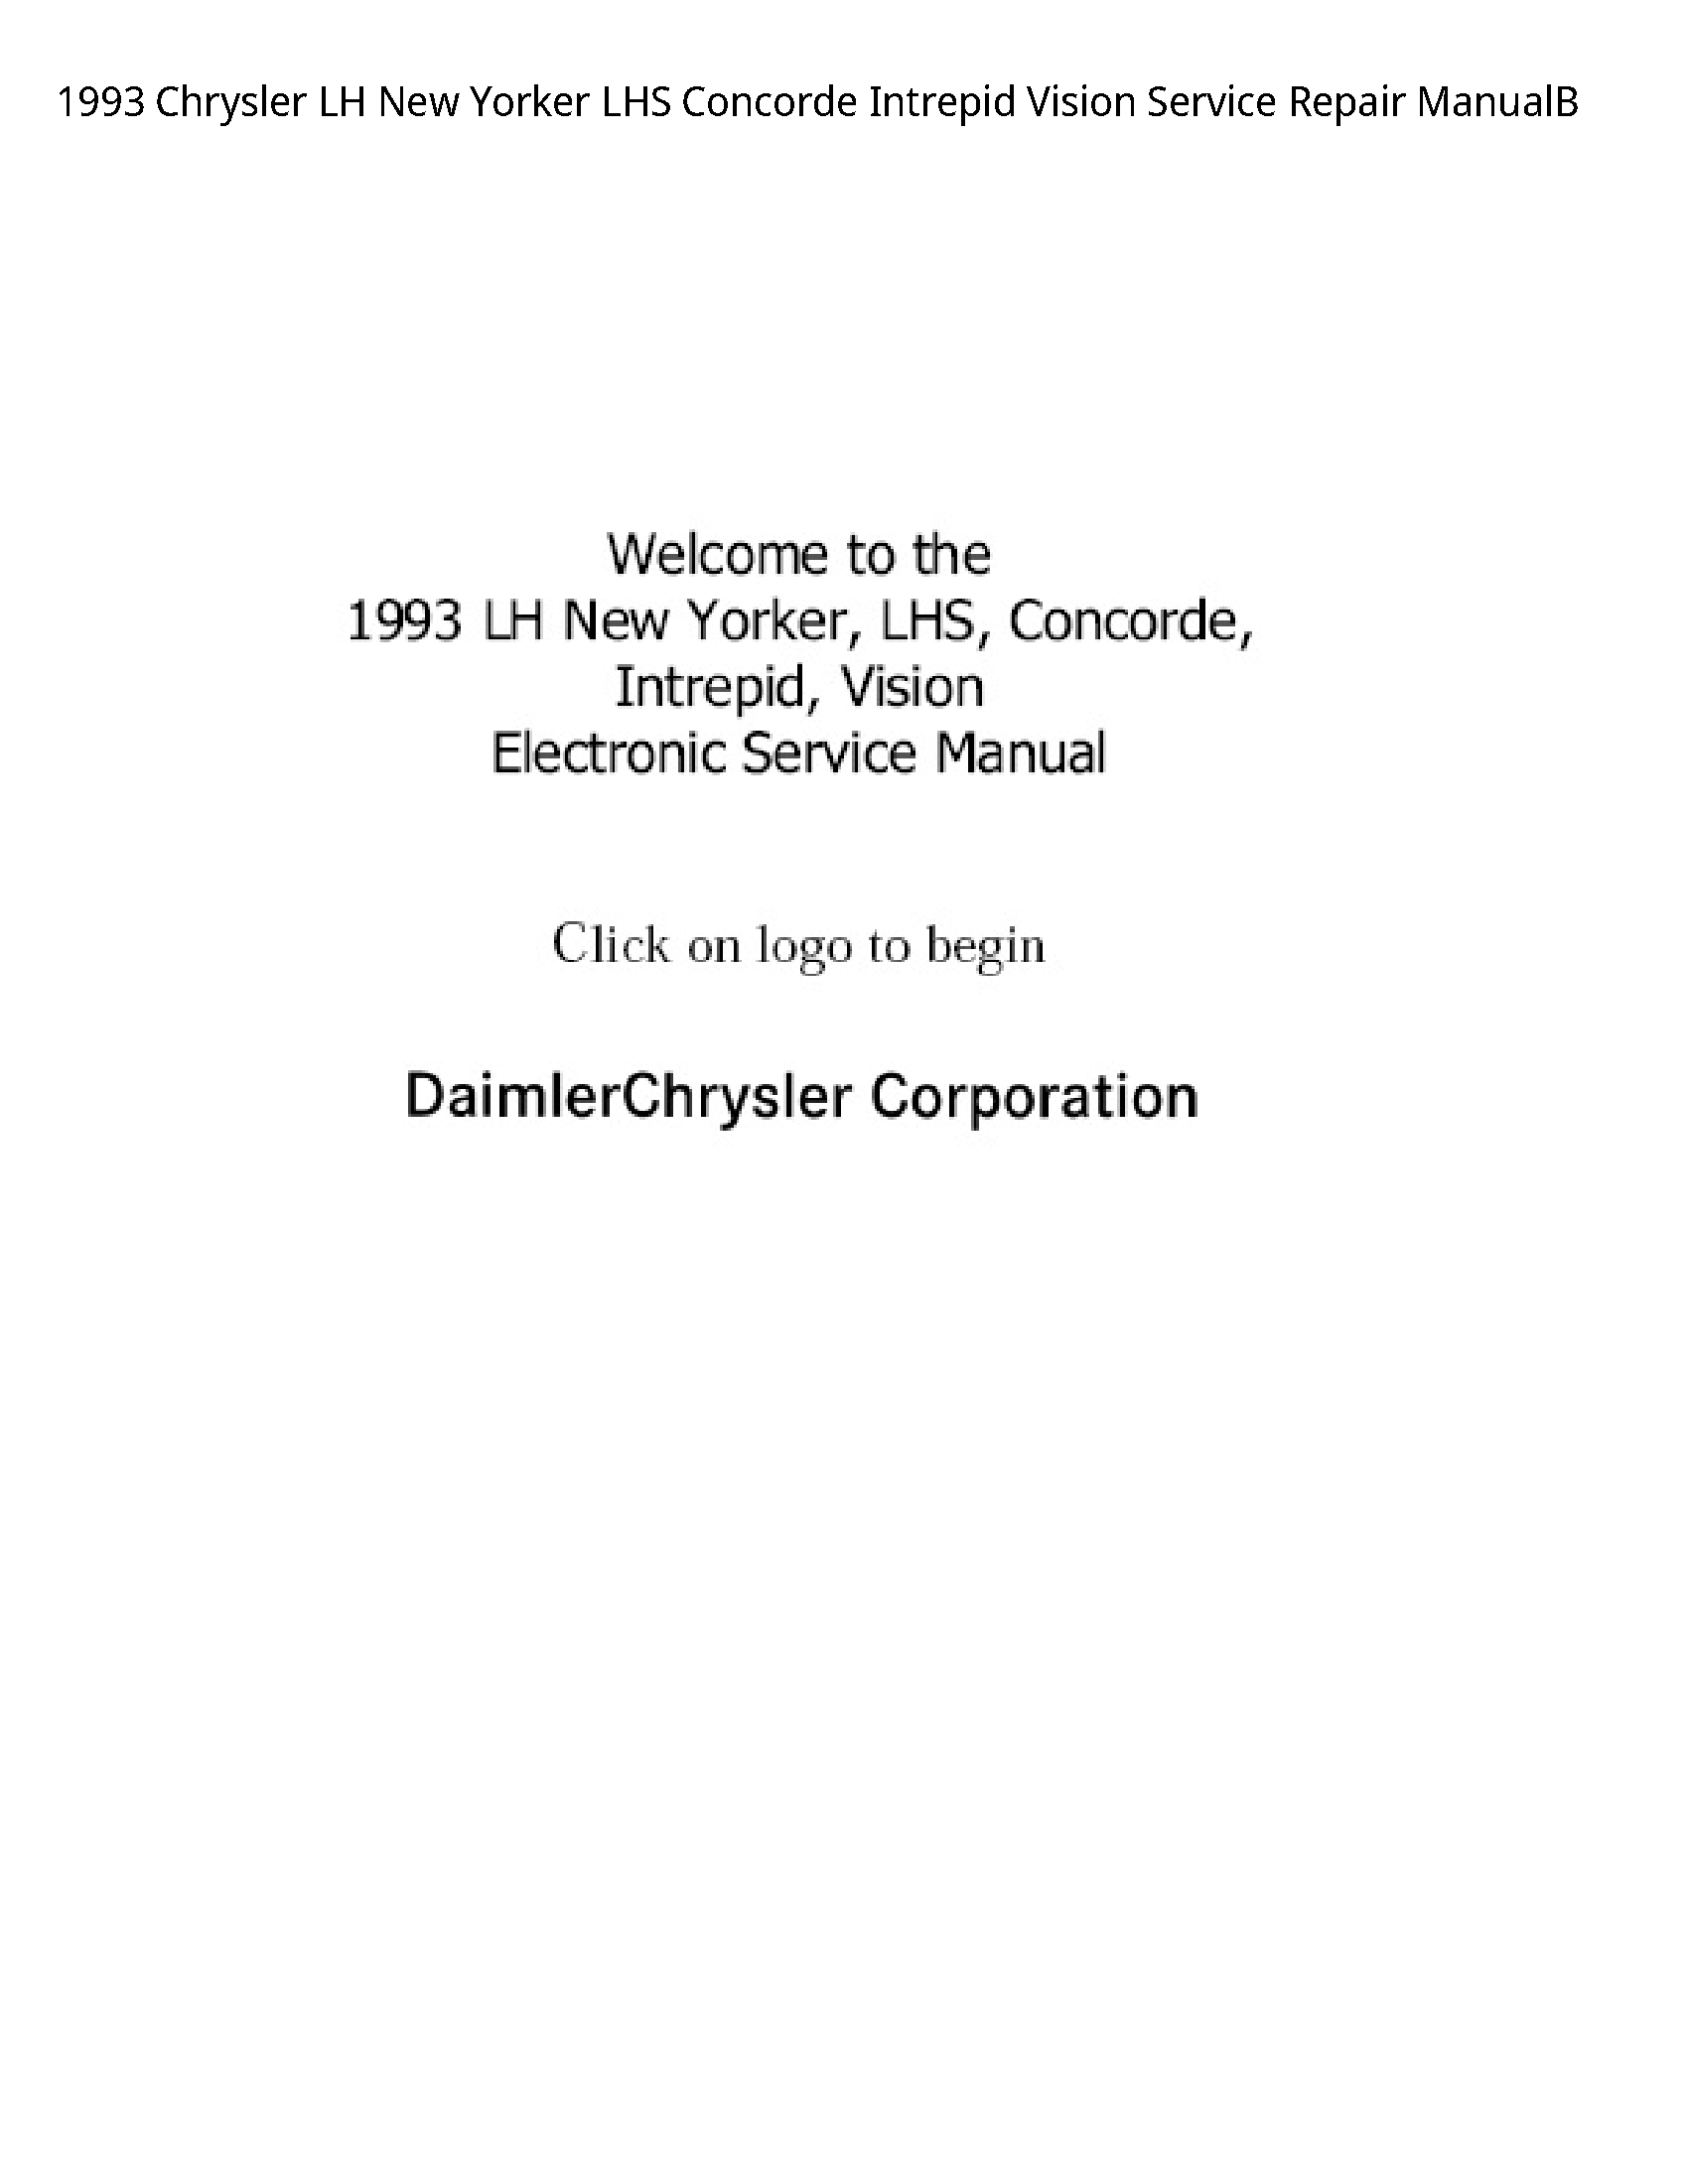 Chrysler LH New Yorker LHS Concorde Intrepid Vision manual